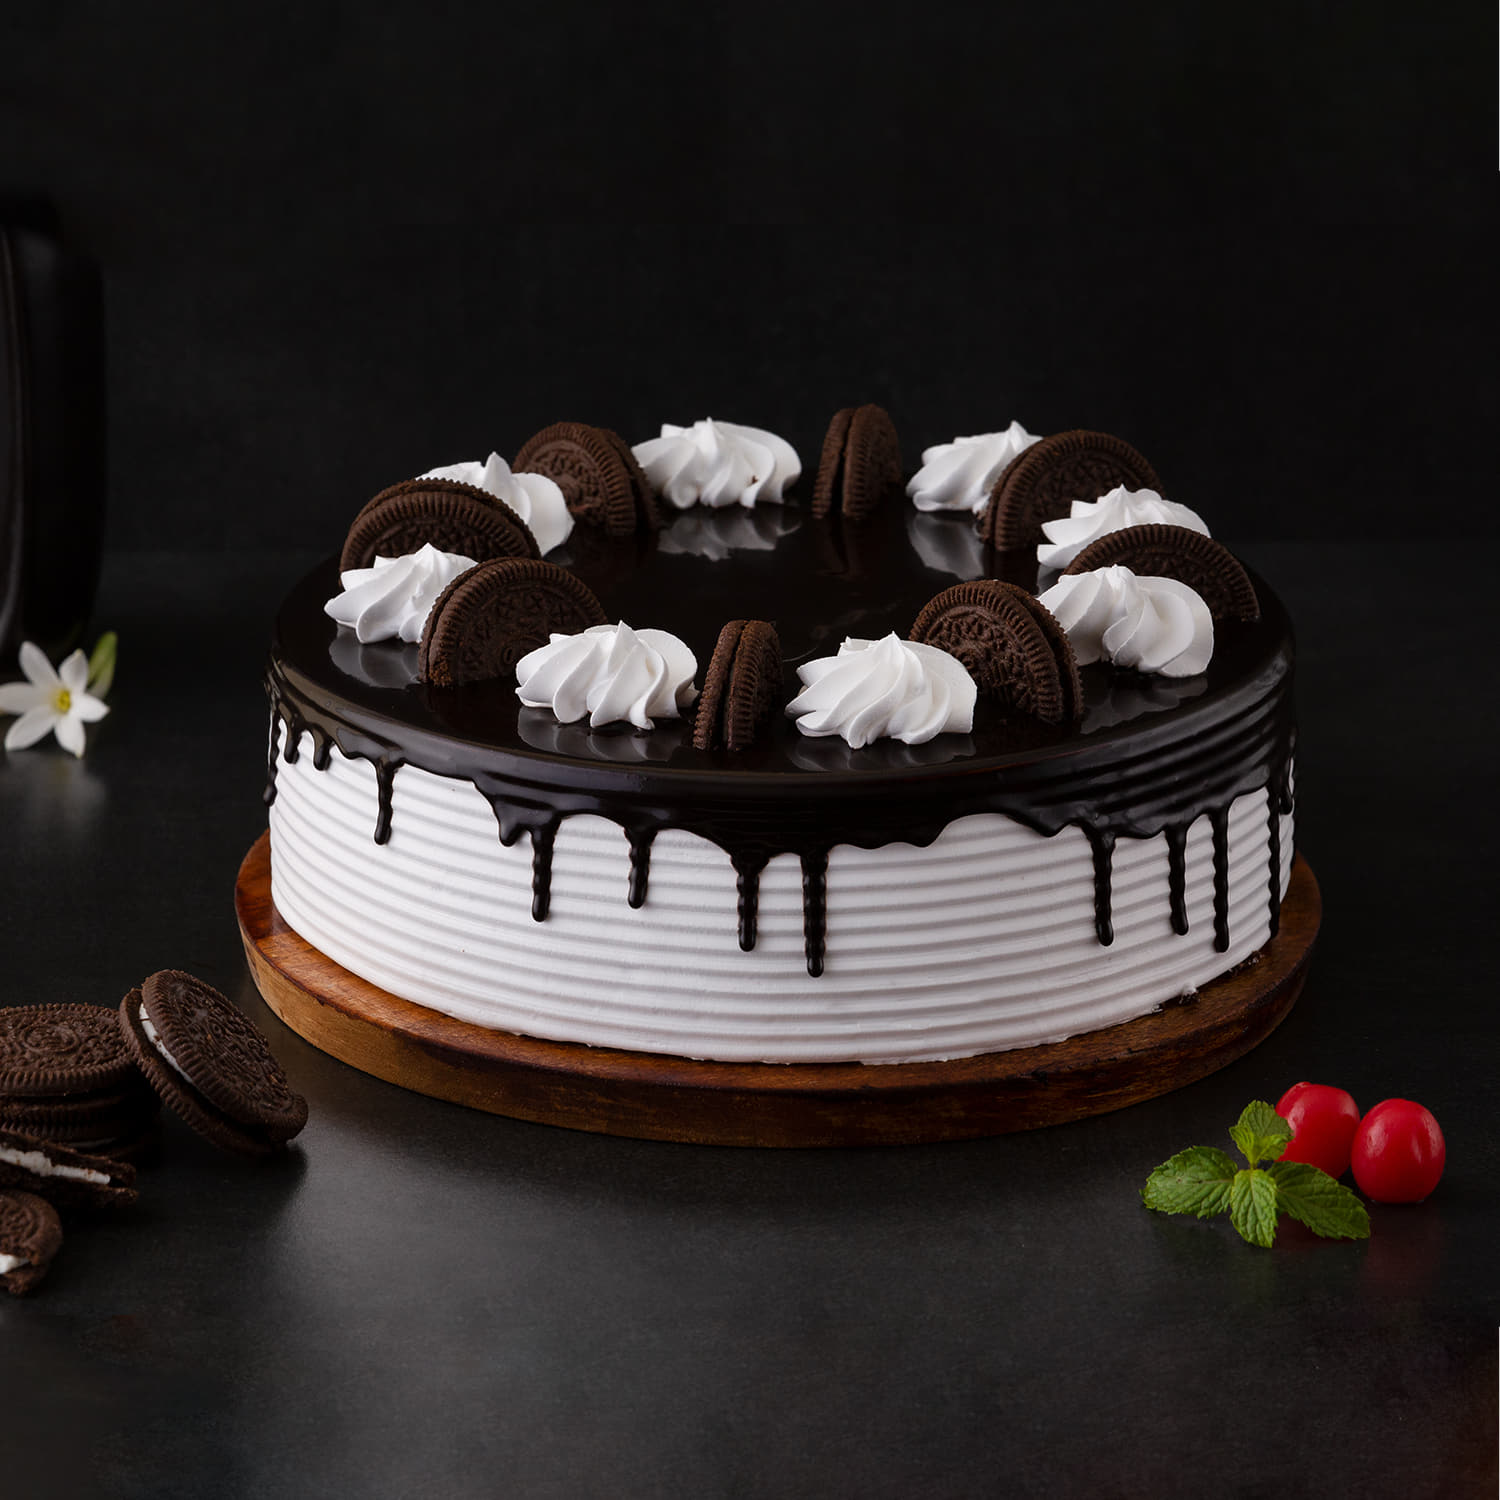 Oreo Drip Cake Recipe: Moist Chocolate Cake w/ Decadent Oreo Frosting